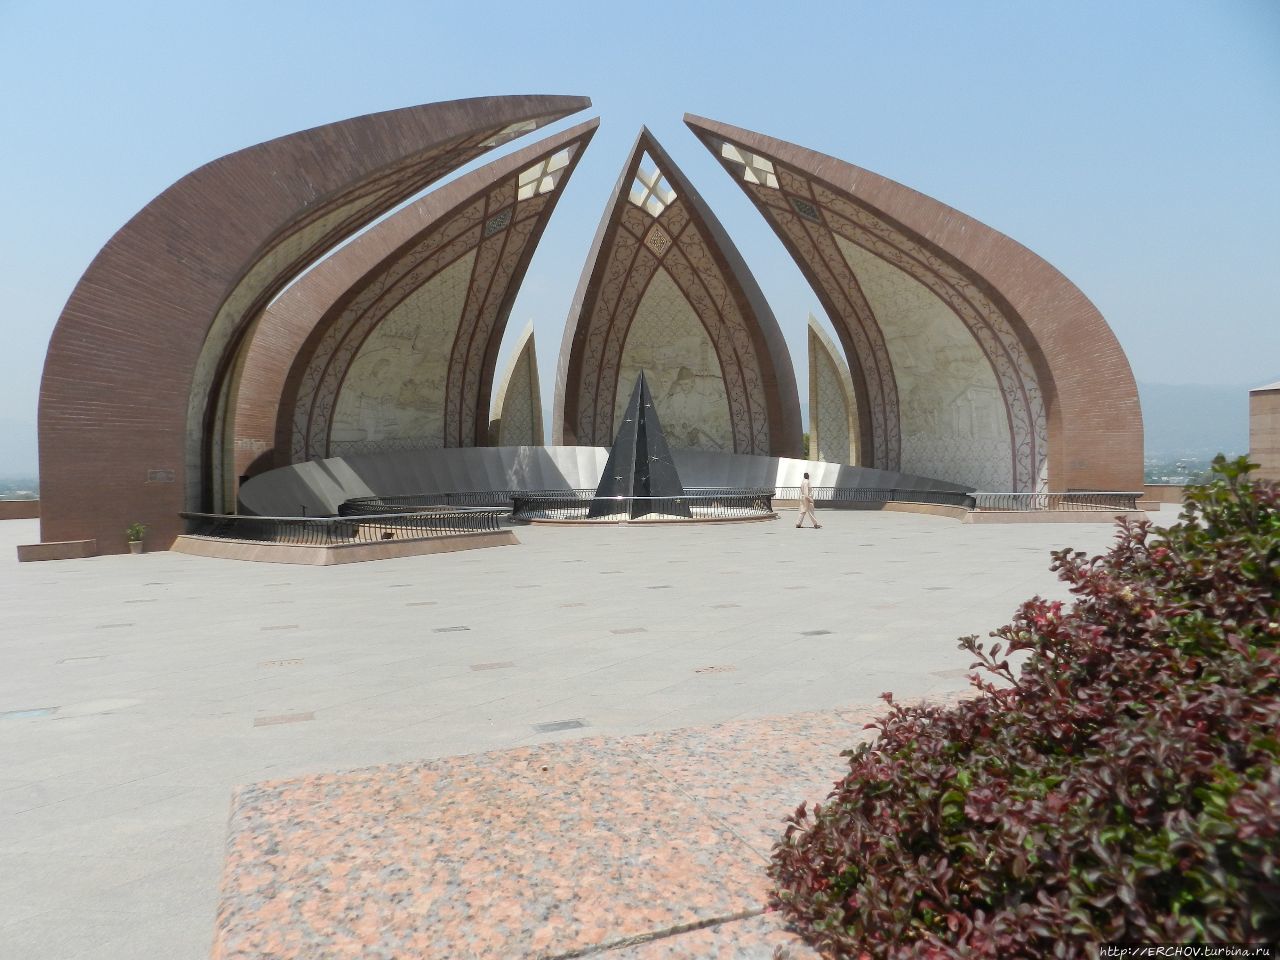 Пакистан. Ч — 13. Беназир Бхутто и Пакистанский Монумент Исламабад, Пакистан